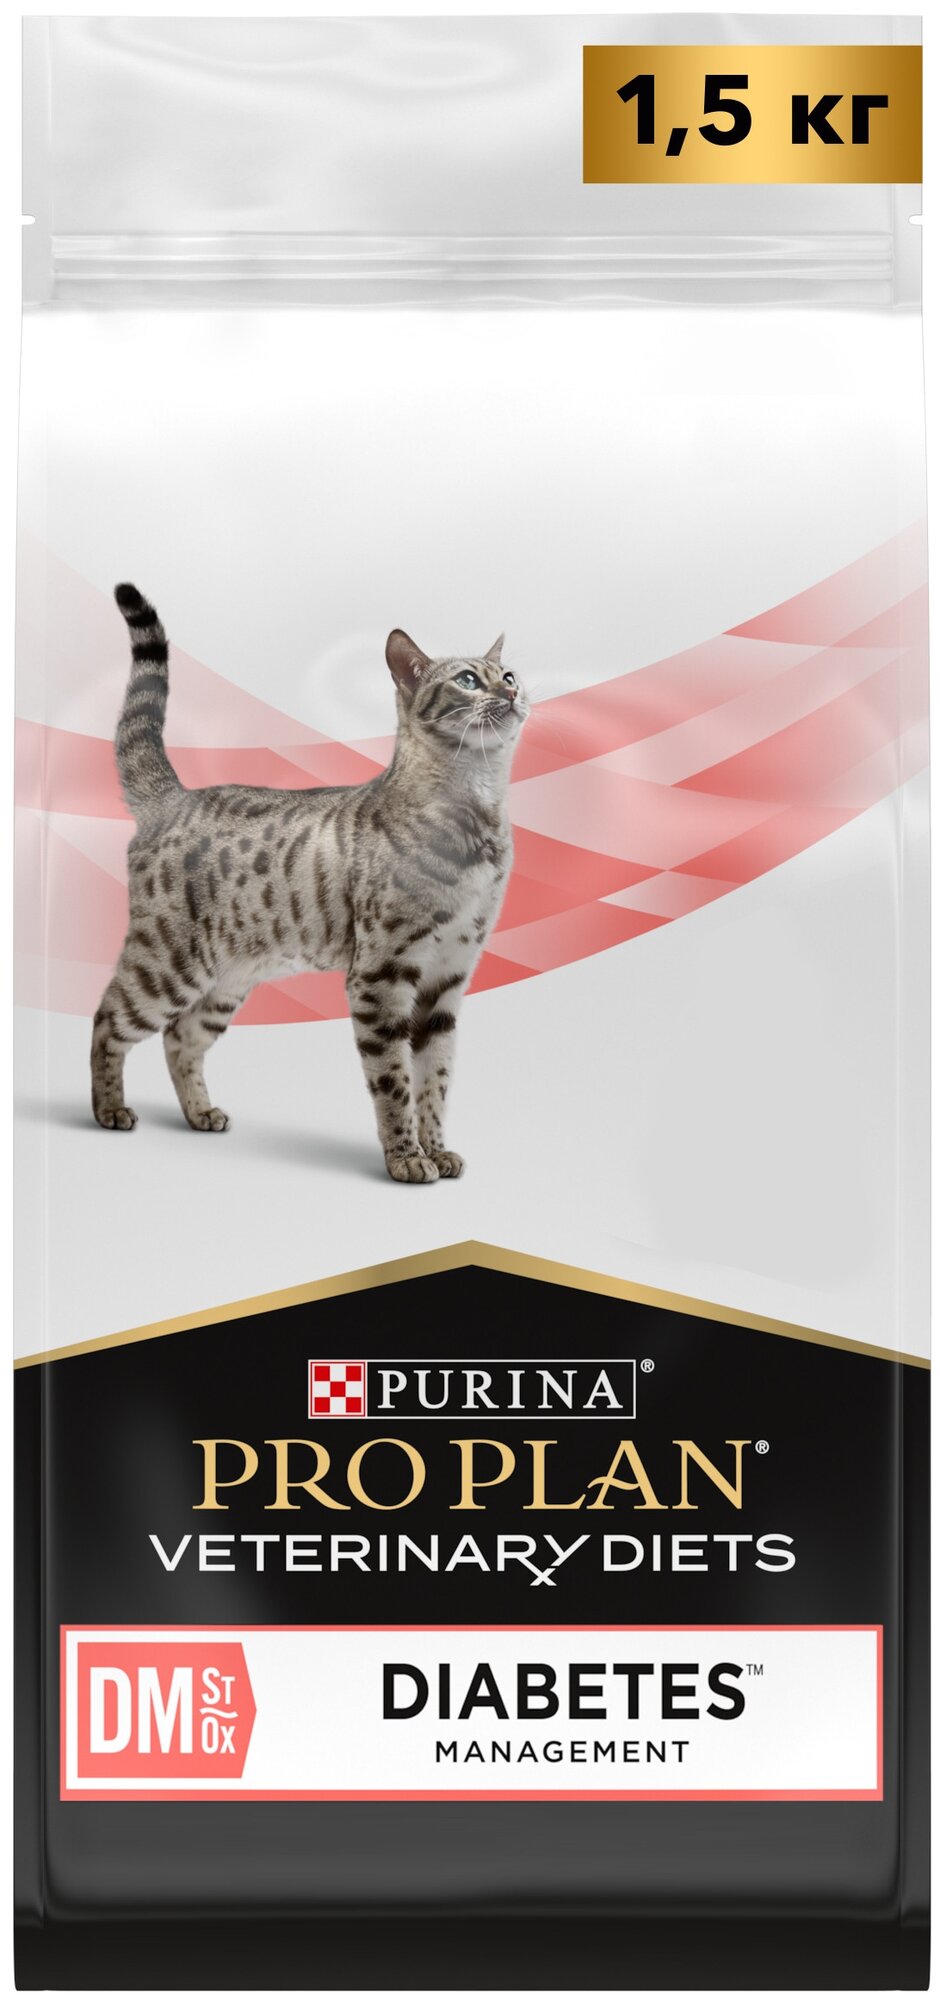 Сухой корм Pro Plan Veterinary diets DM корм для кошек при диабете, Пакет, 1,5 кг - фотография № 1